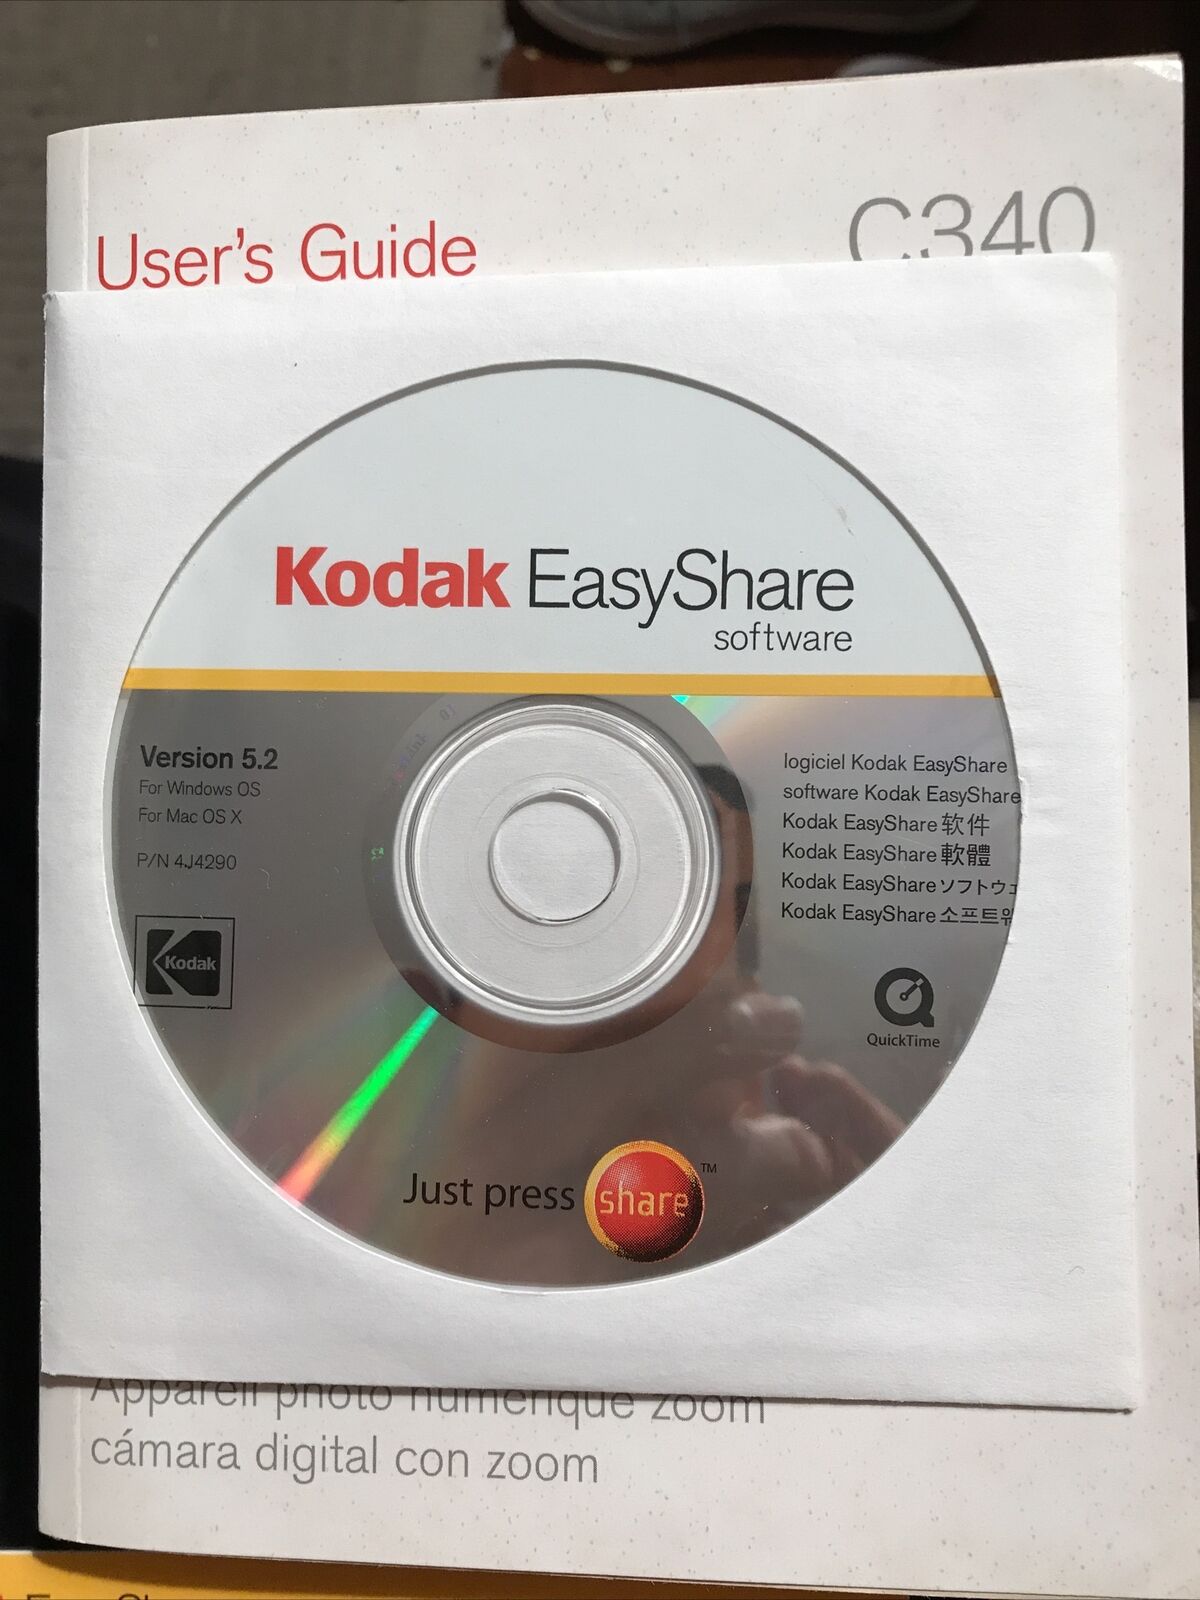 Kodak Easyshare Printer Dock Software CD Version 5.2 And User’s Guide C340